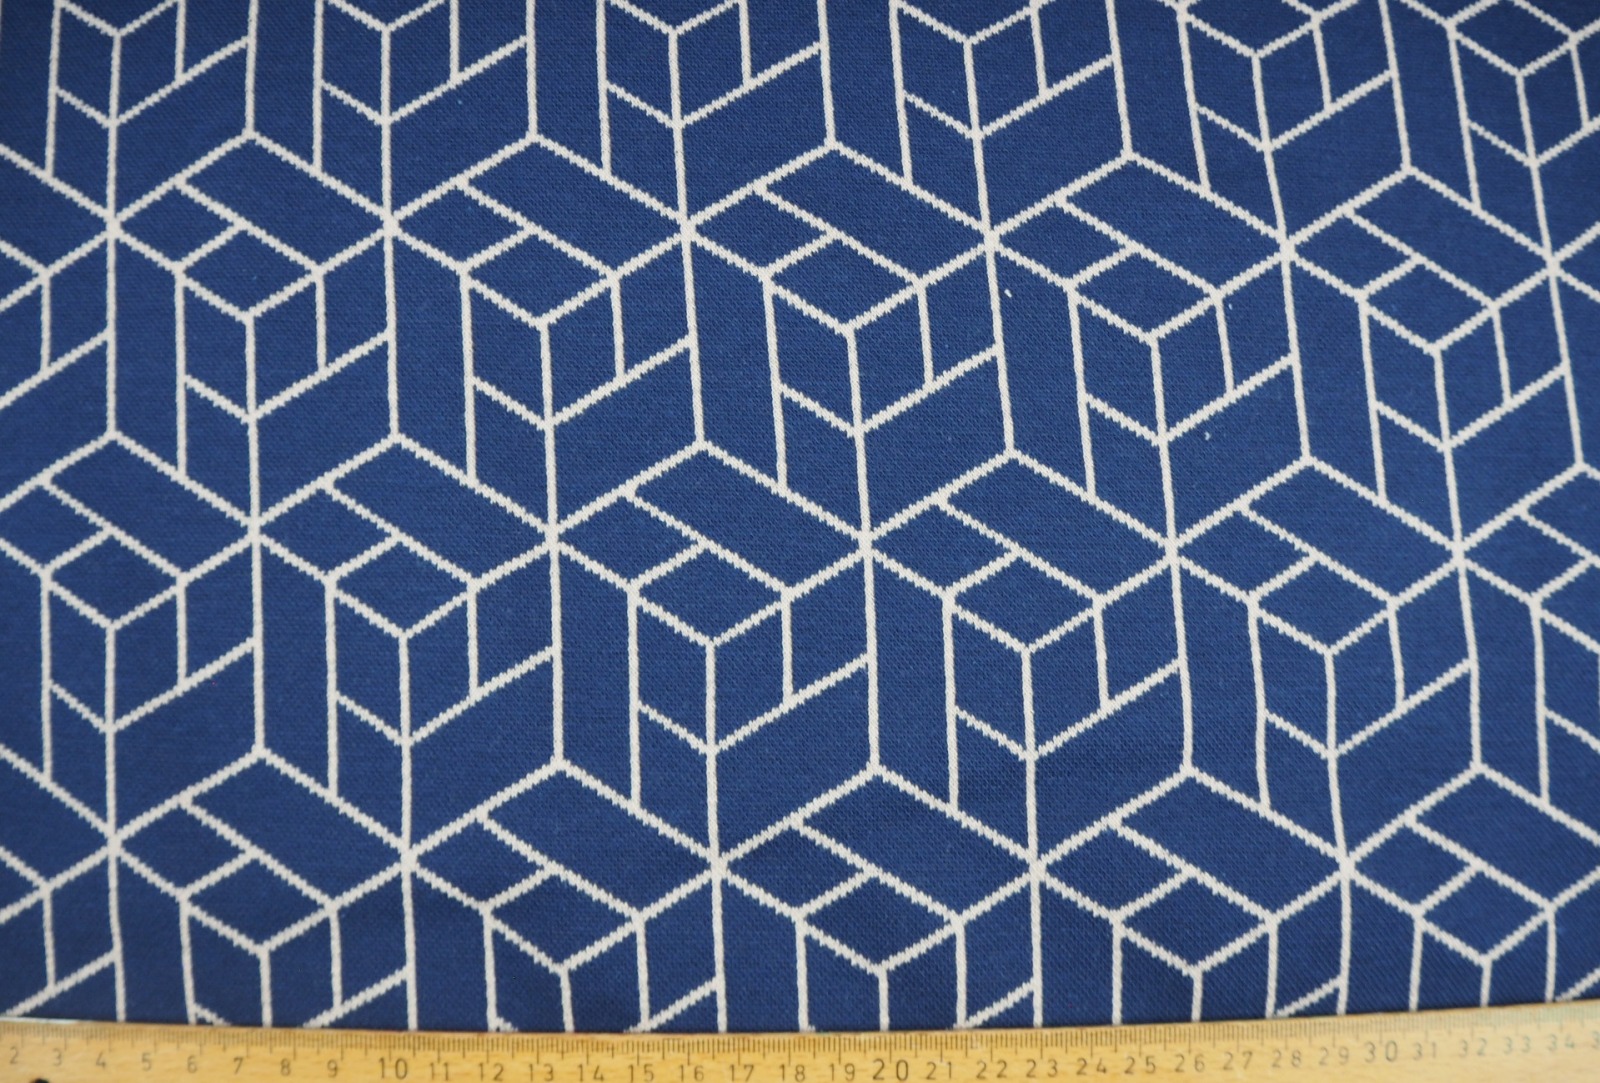 Jaquardstrick 1596/m Cozy Collection by lycklig design Swafing blau geometrisches Muster Damenstoffe Meterware 3